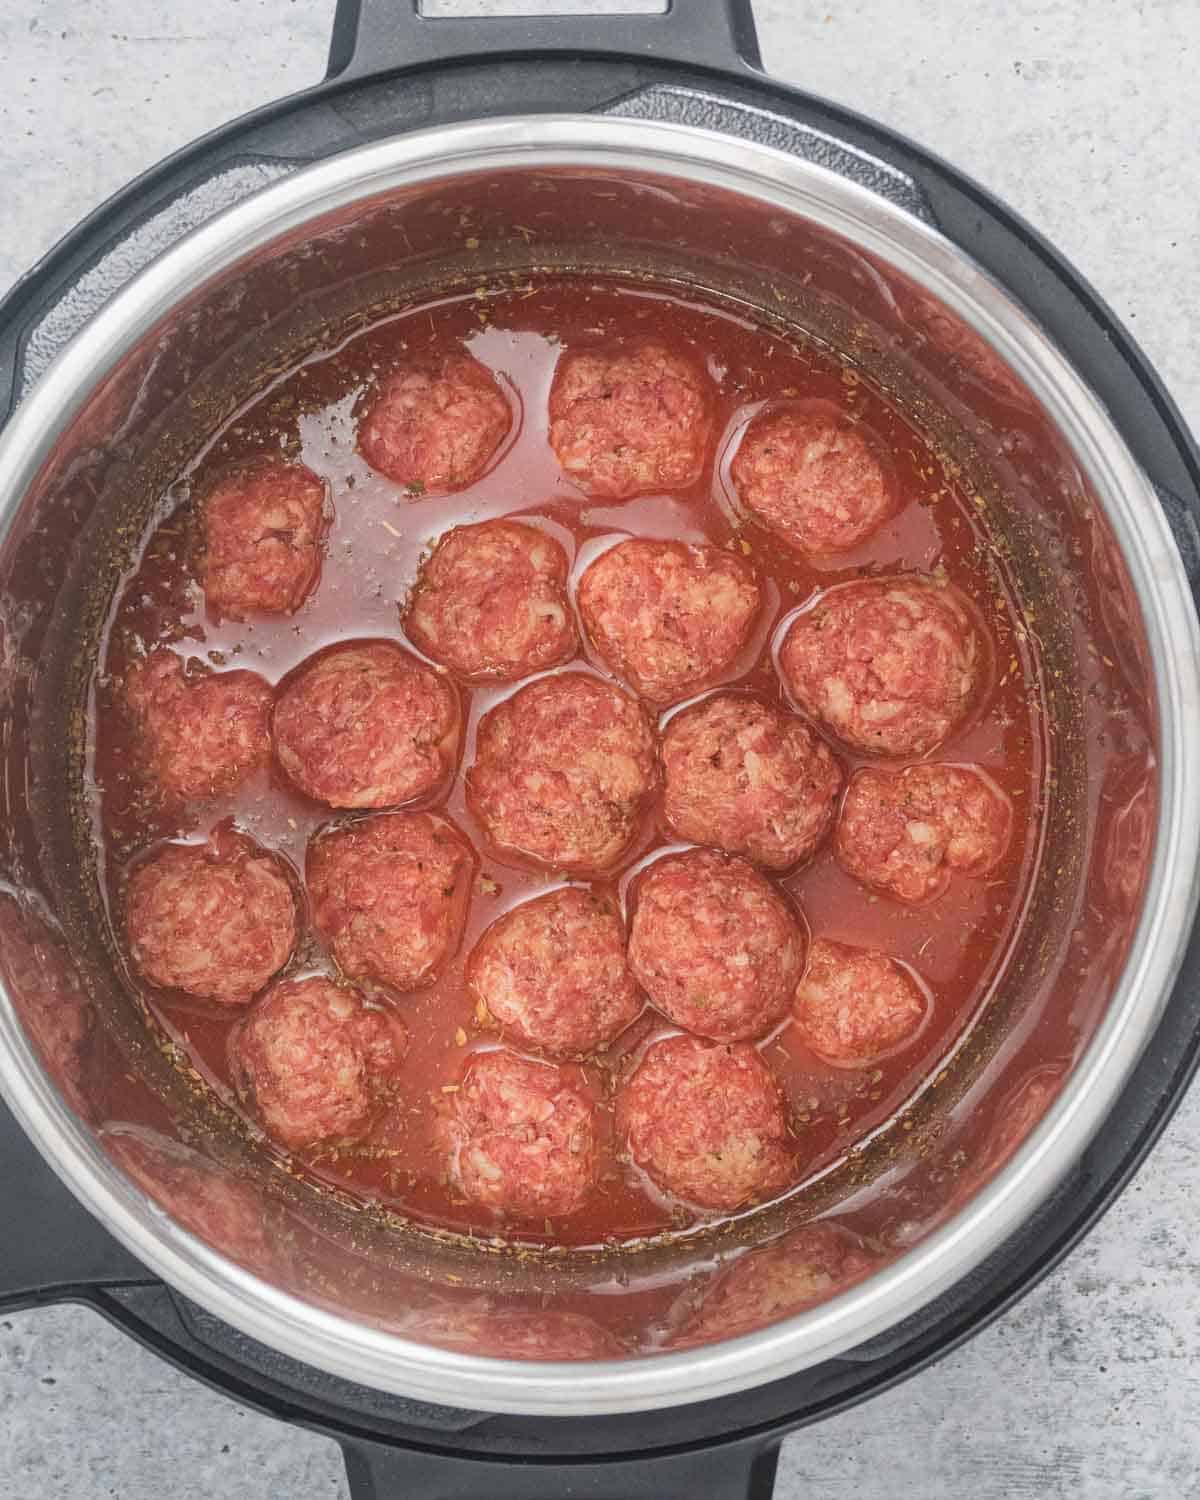 Raw meatballs in sauce inside an Instant Pot.